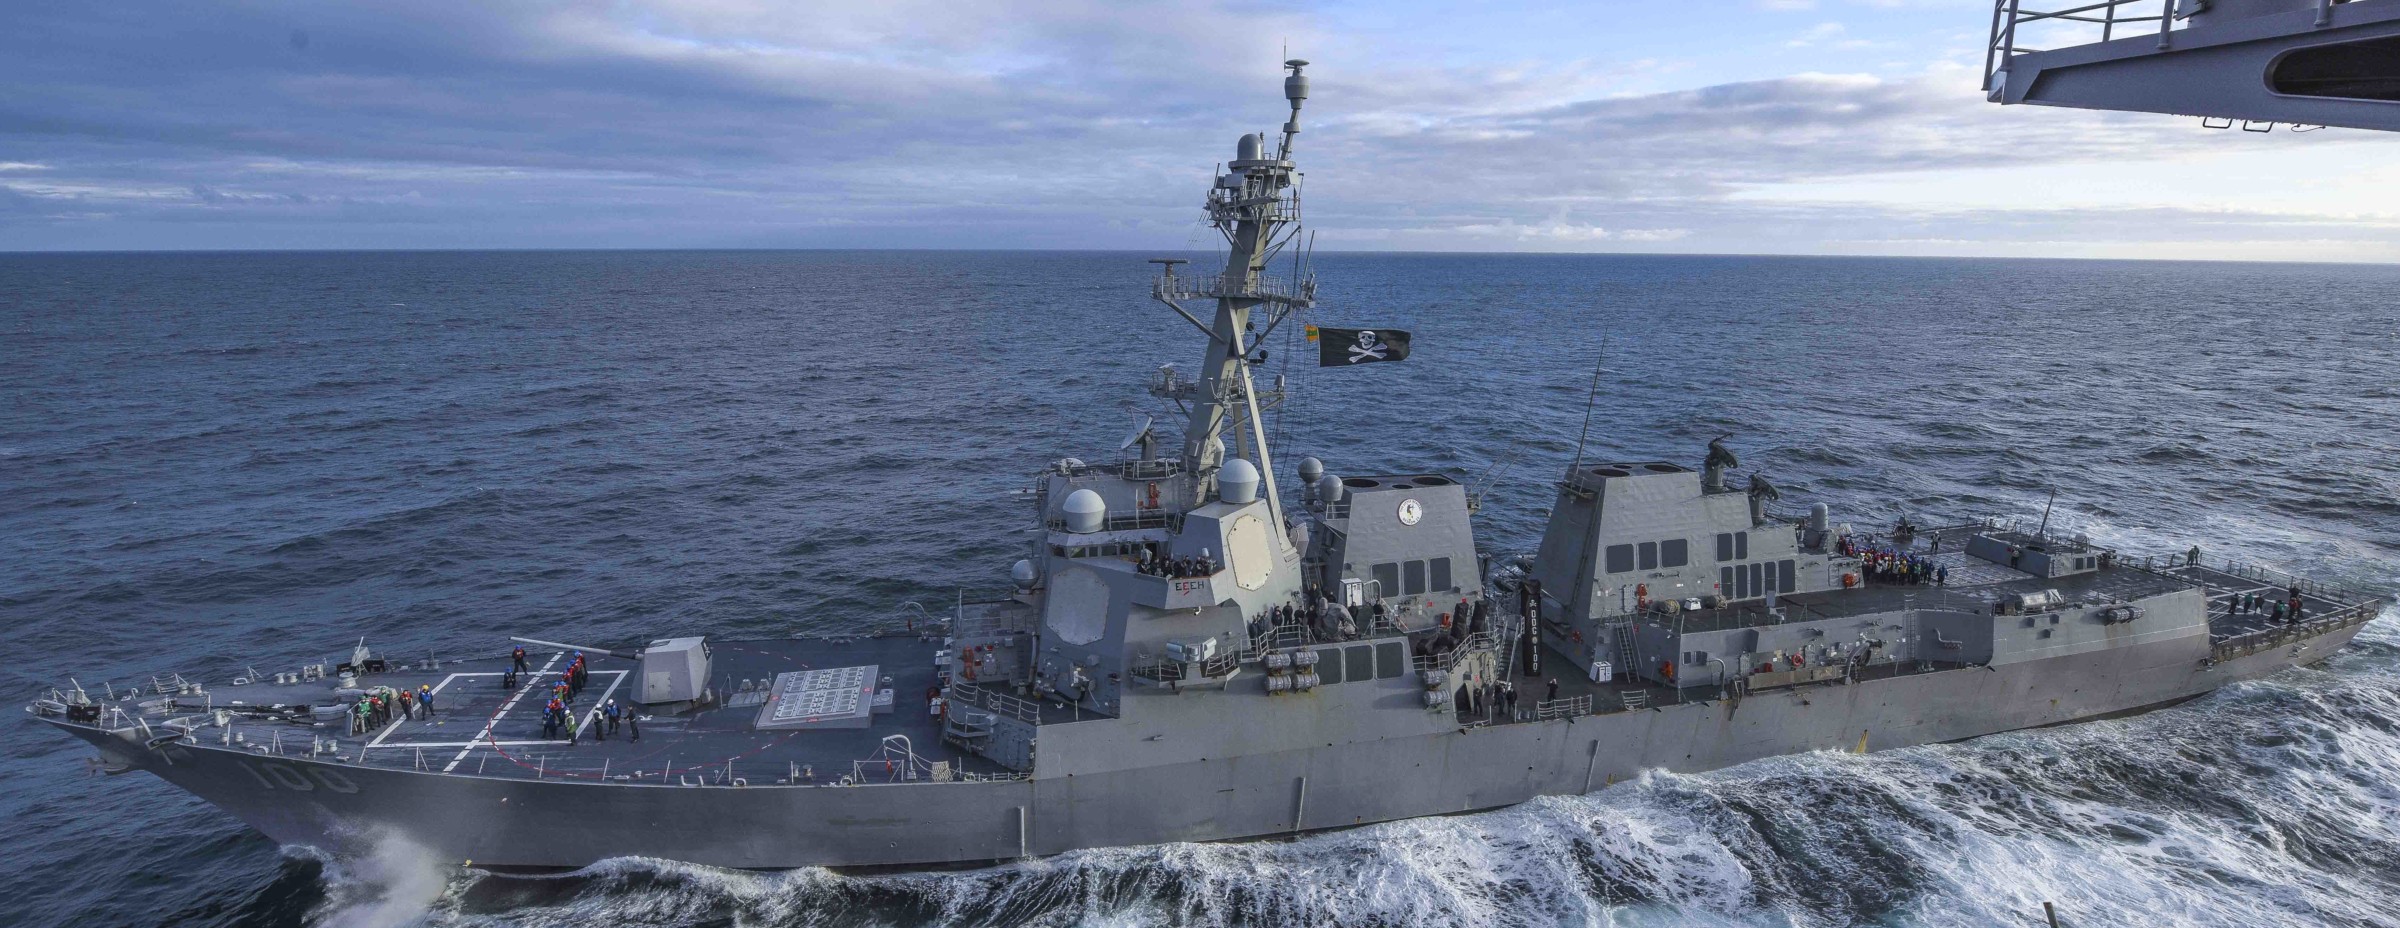 ddg-100 uss kidd arleigh burke class guided missile destroyer exercise northern edge alaska 43